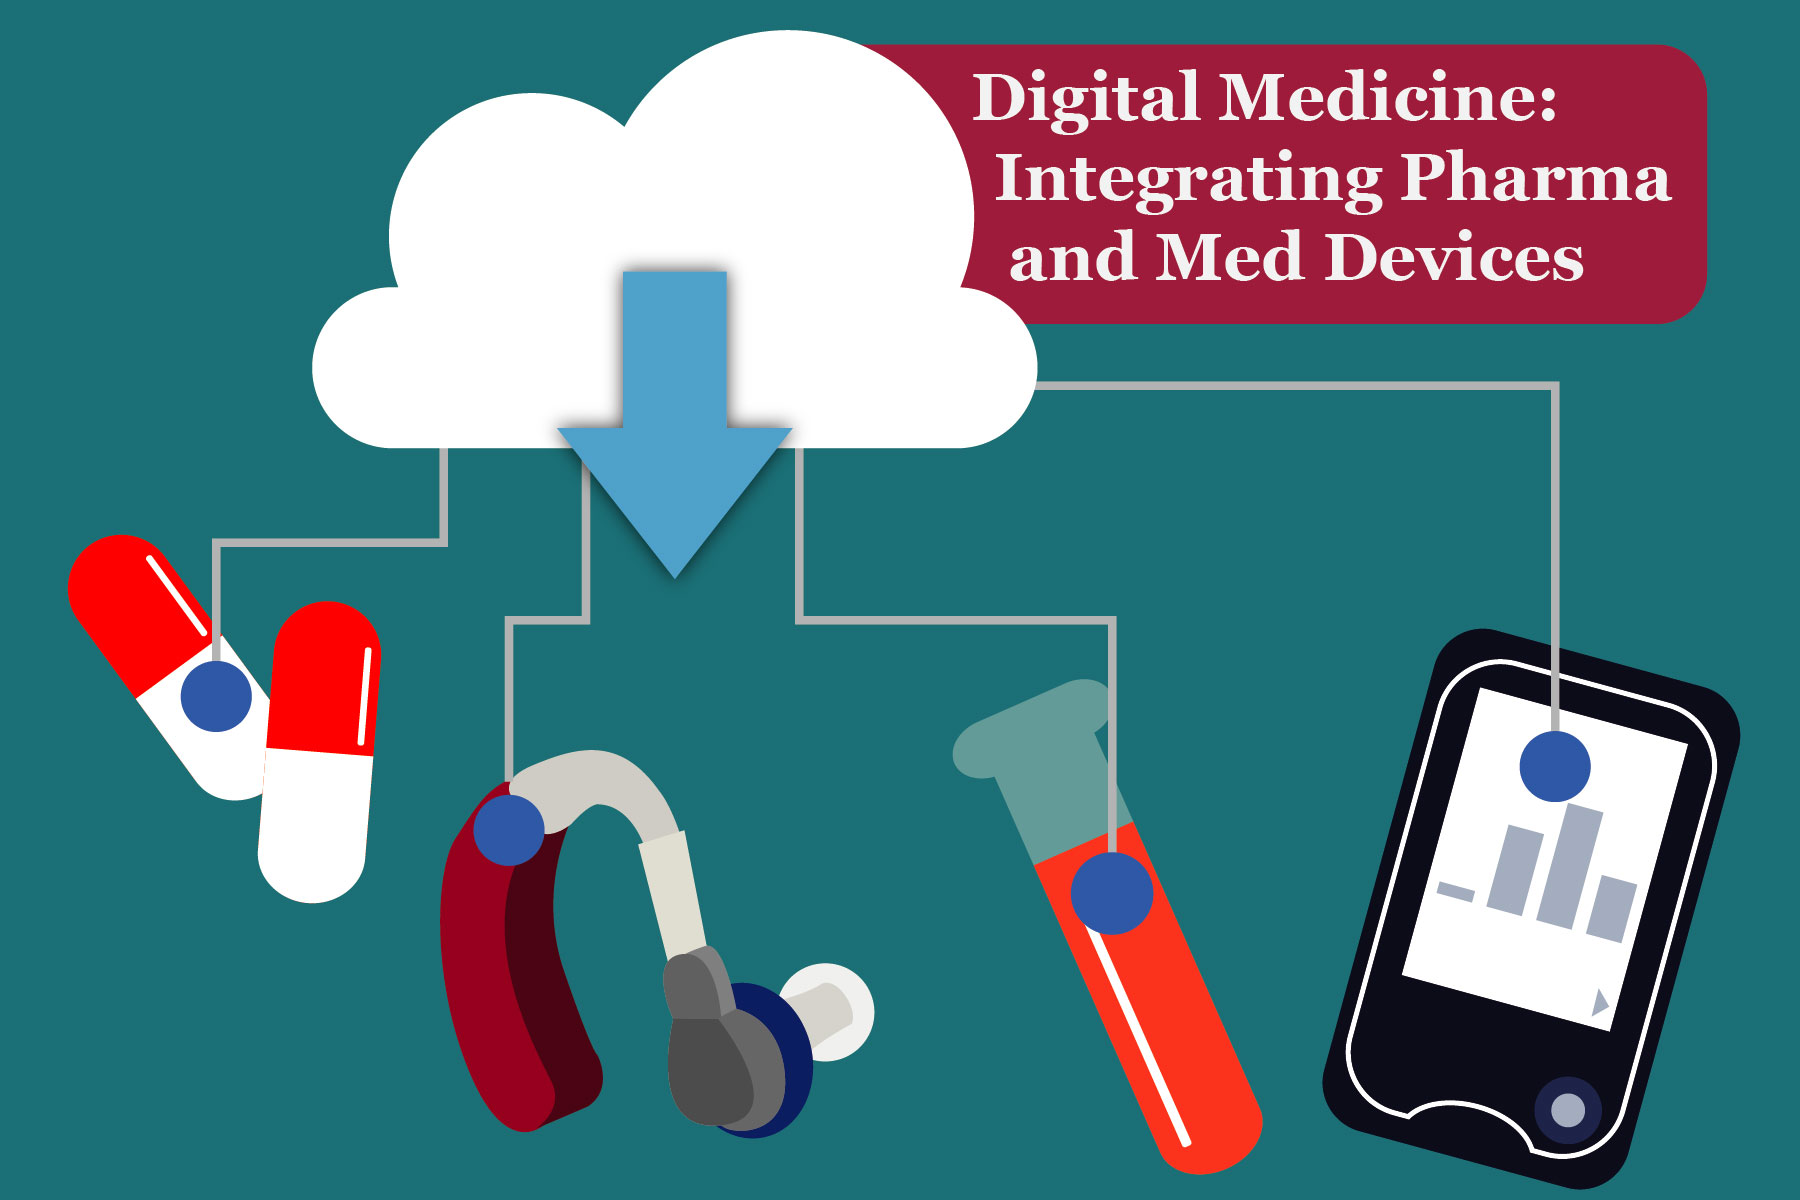 Digital Medicine: Integrating Pharma and Med Devices